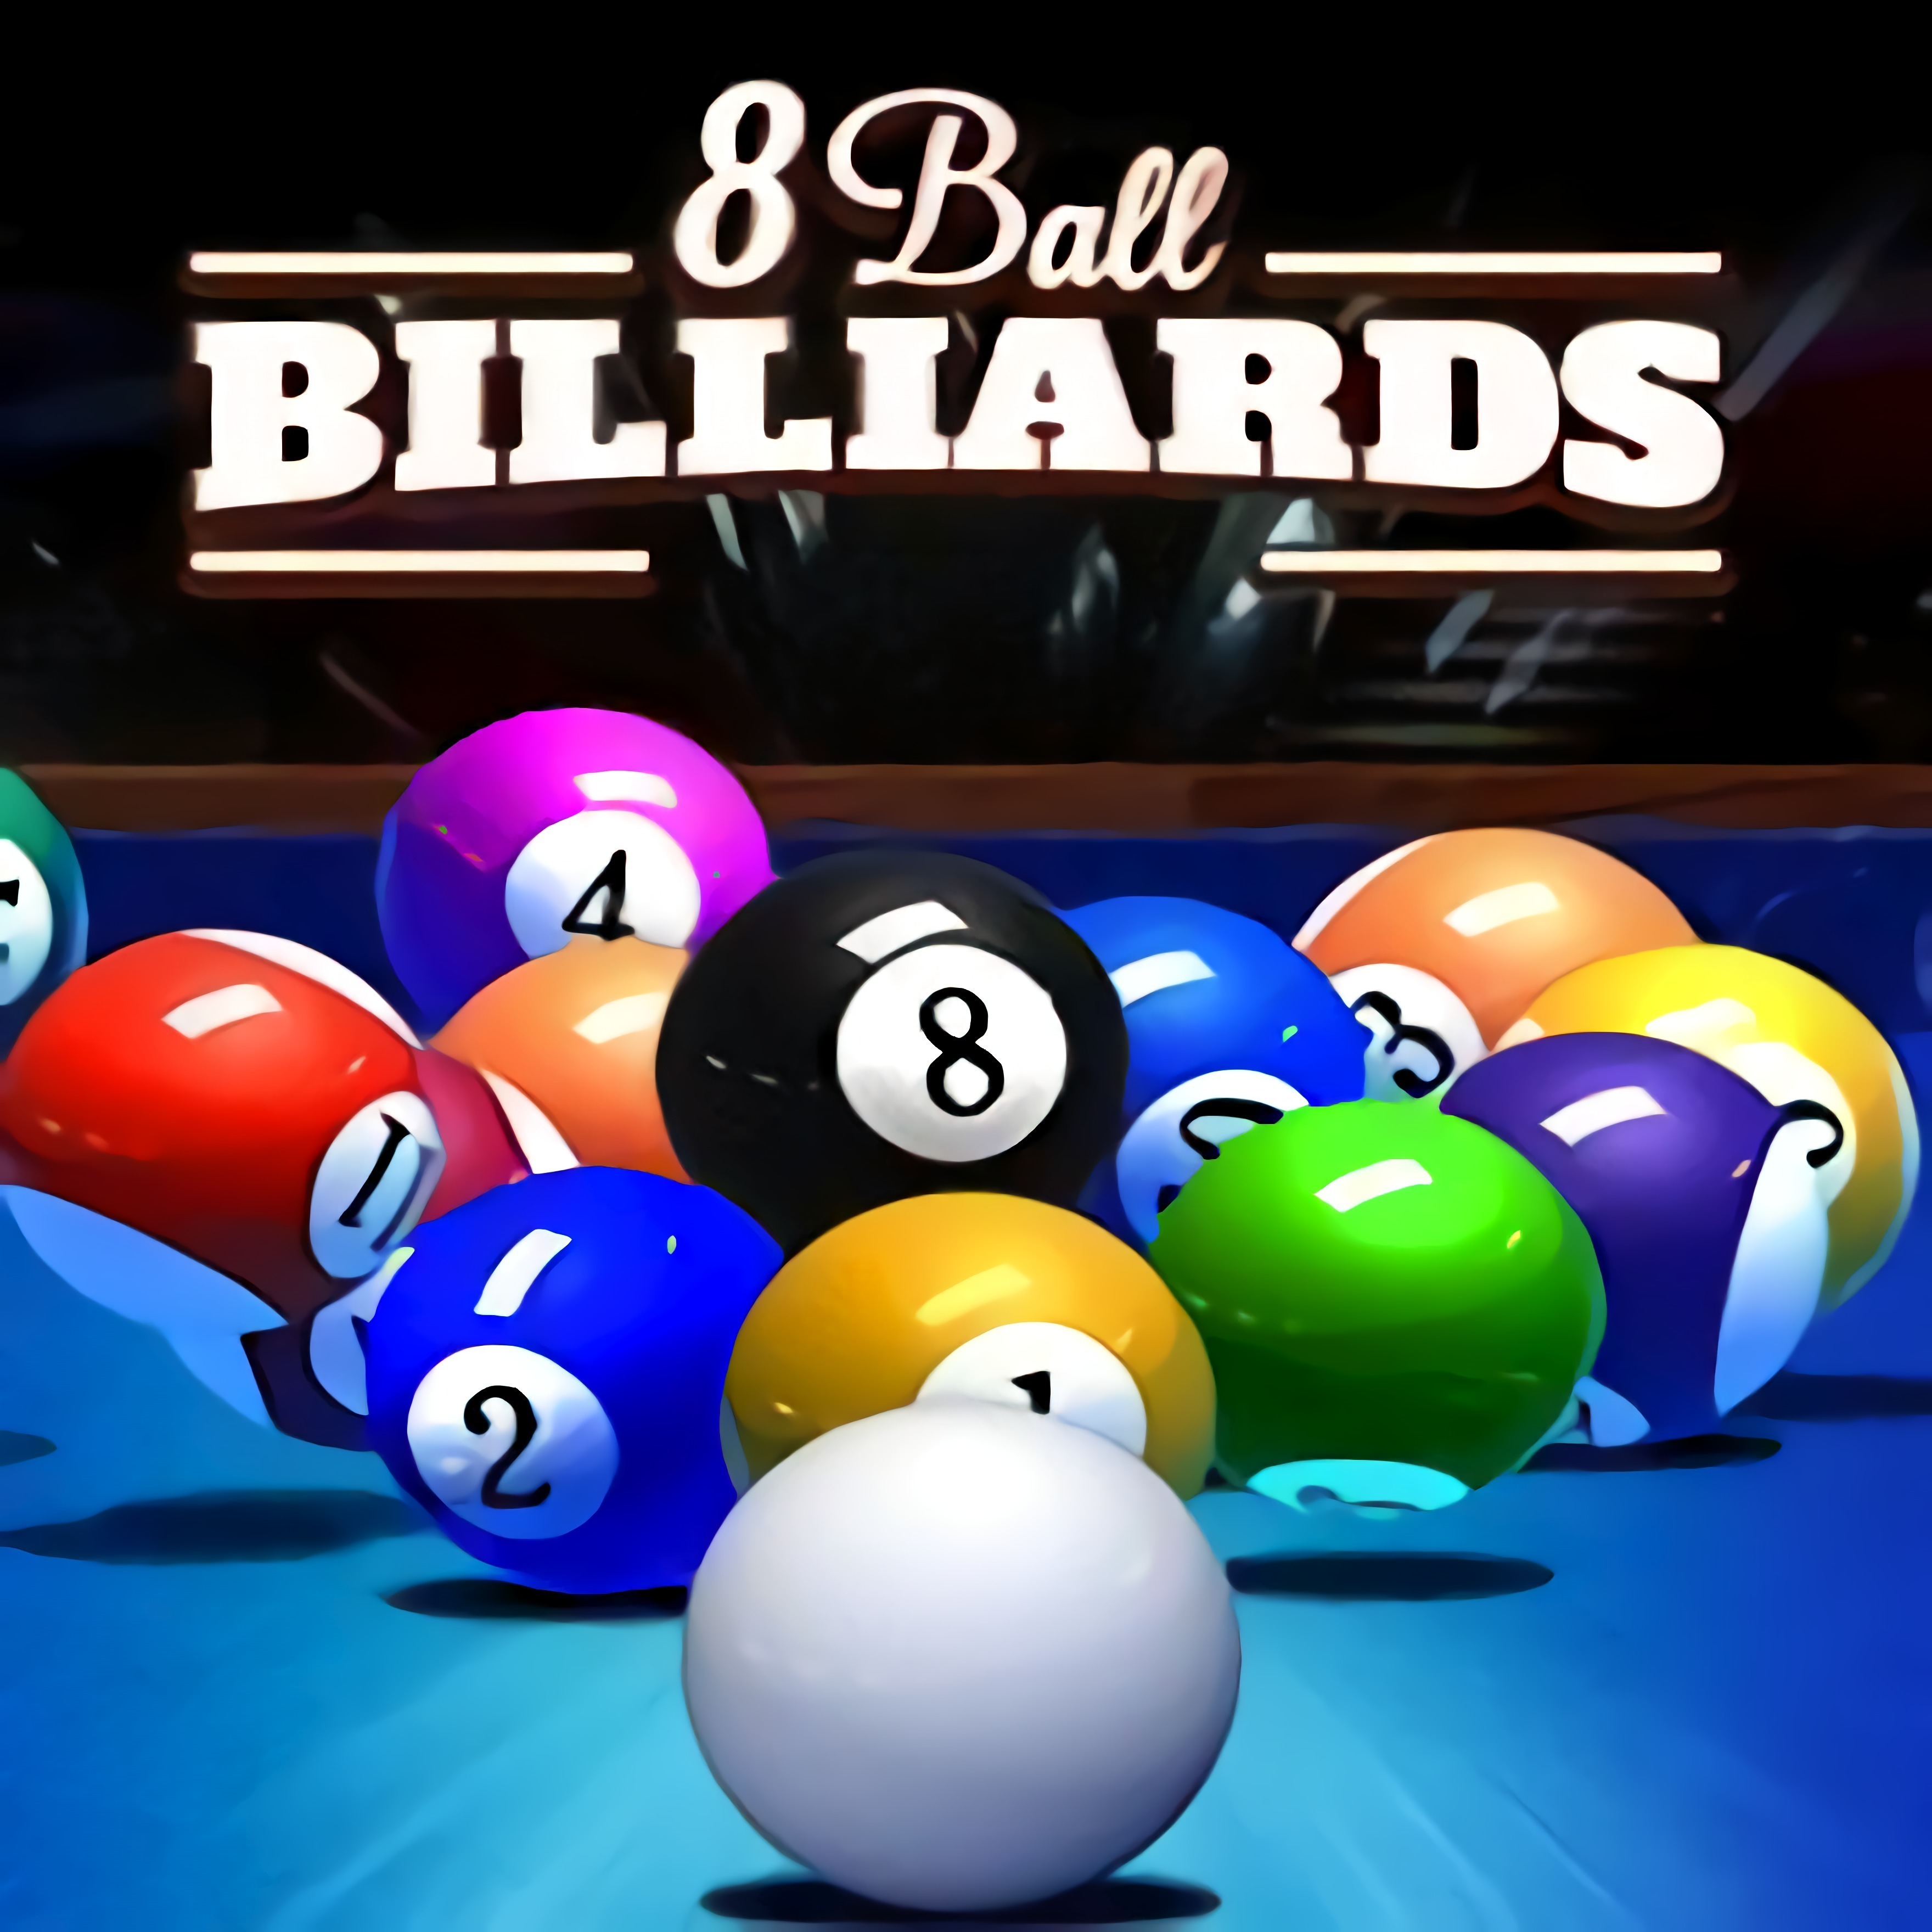 8 Ball Billiard Pool